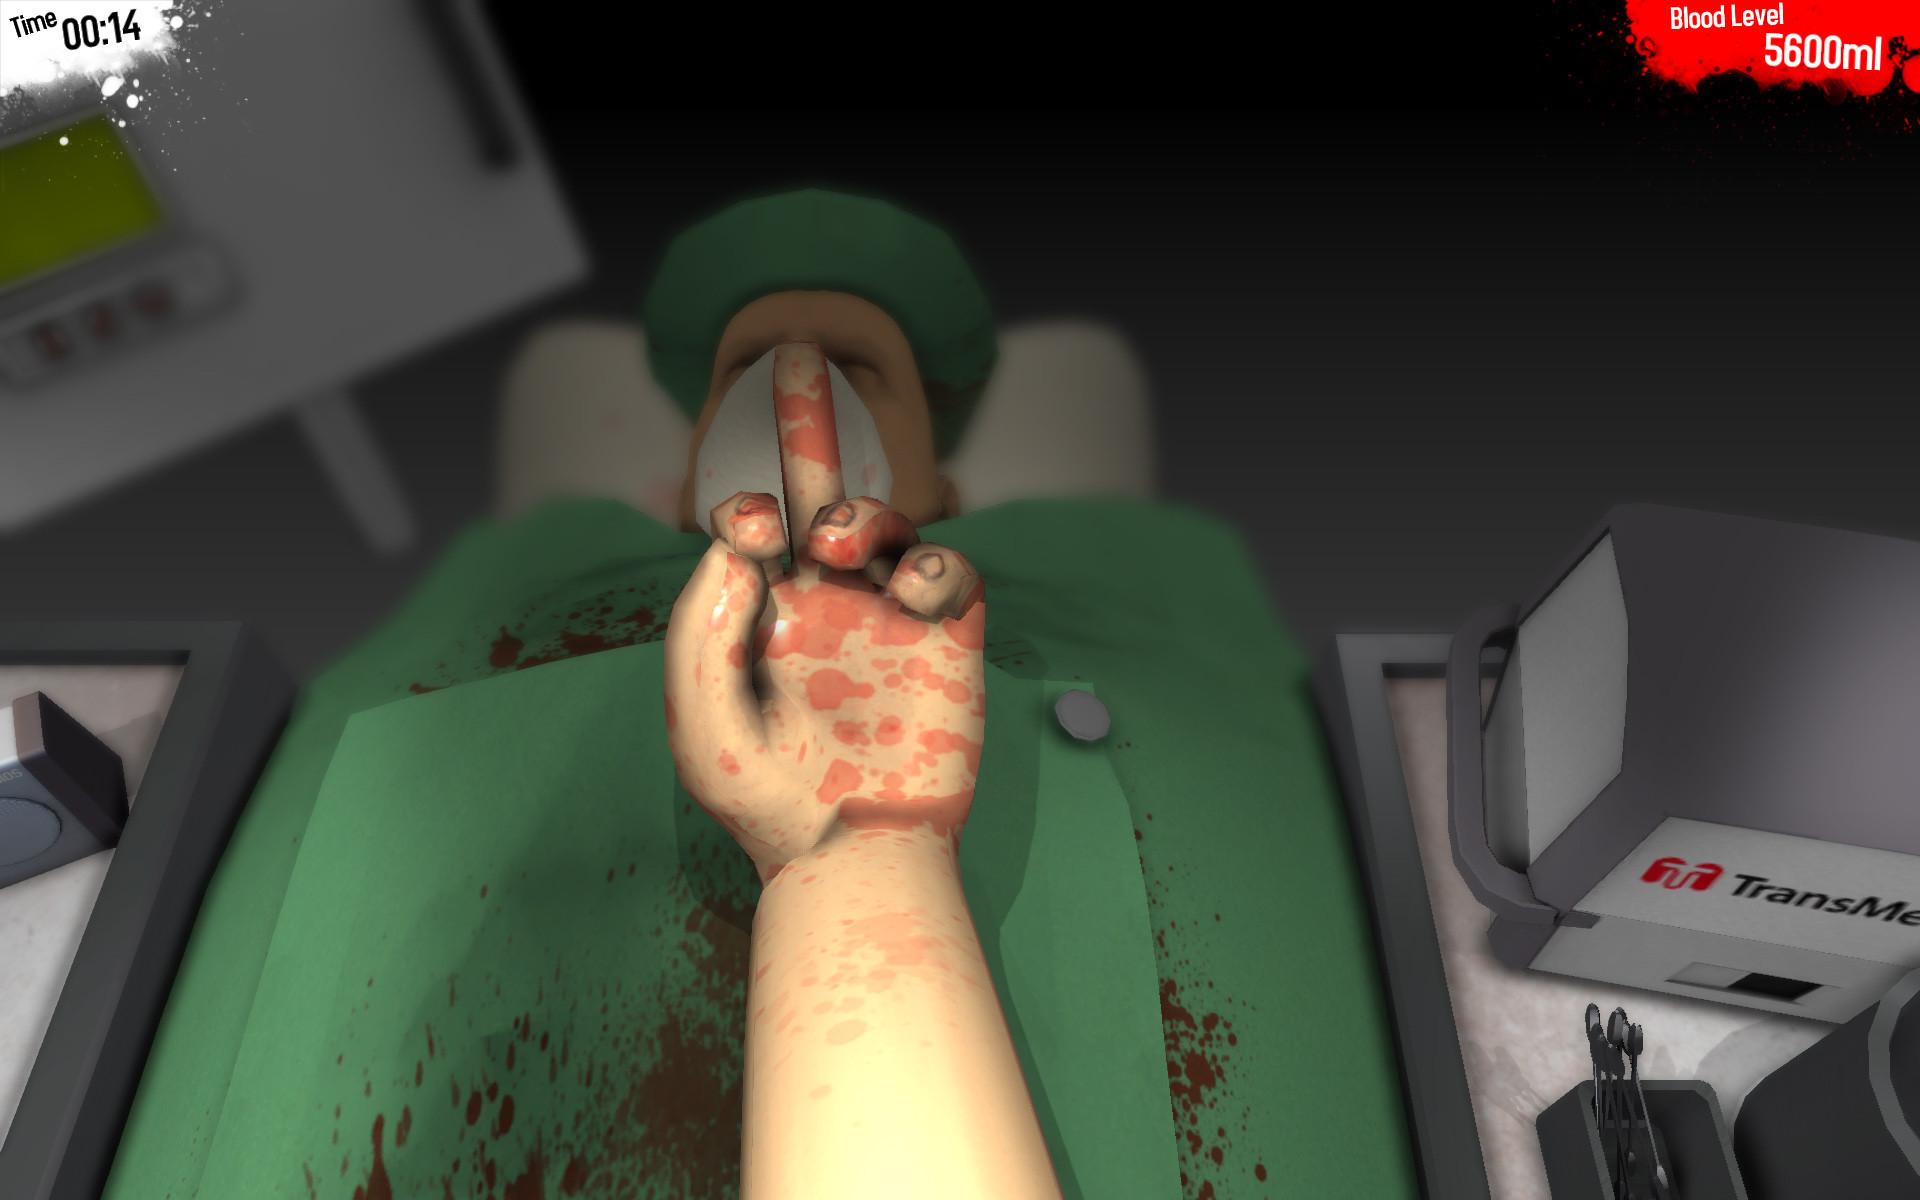 Googled Surgeon Simulator 2013 to see what it